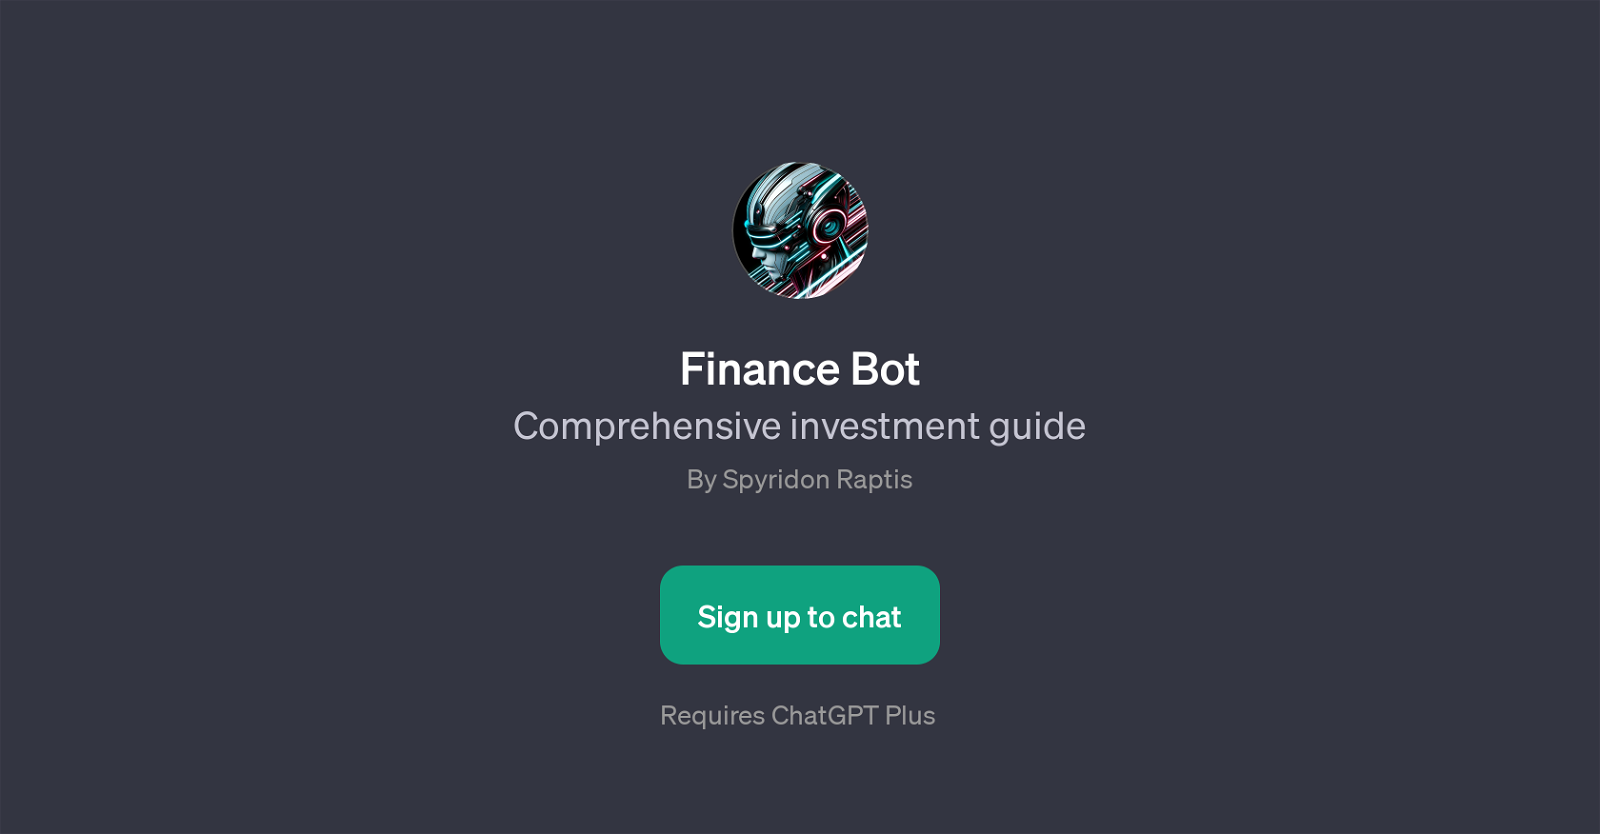 Finance Bot website